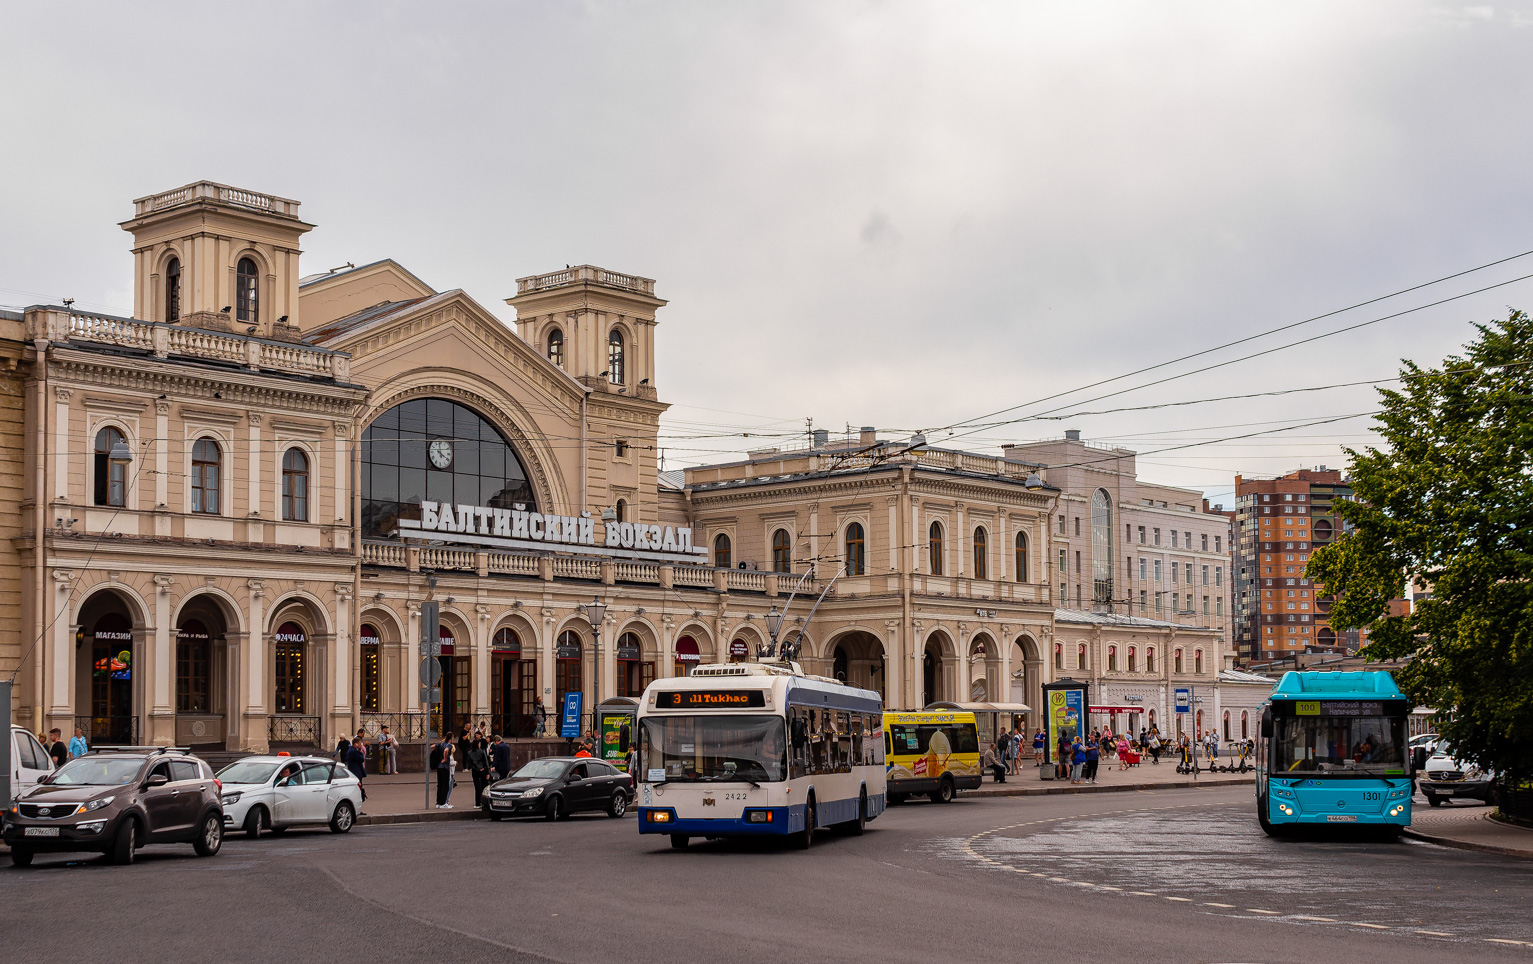 Sankt Peterburgas, BKM 321 nr. 2422; Sankt Peterburgas — Terminal stations